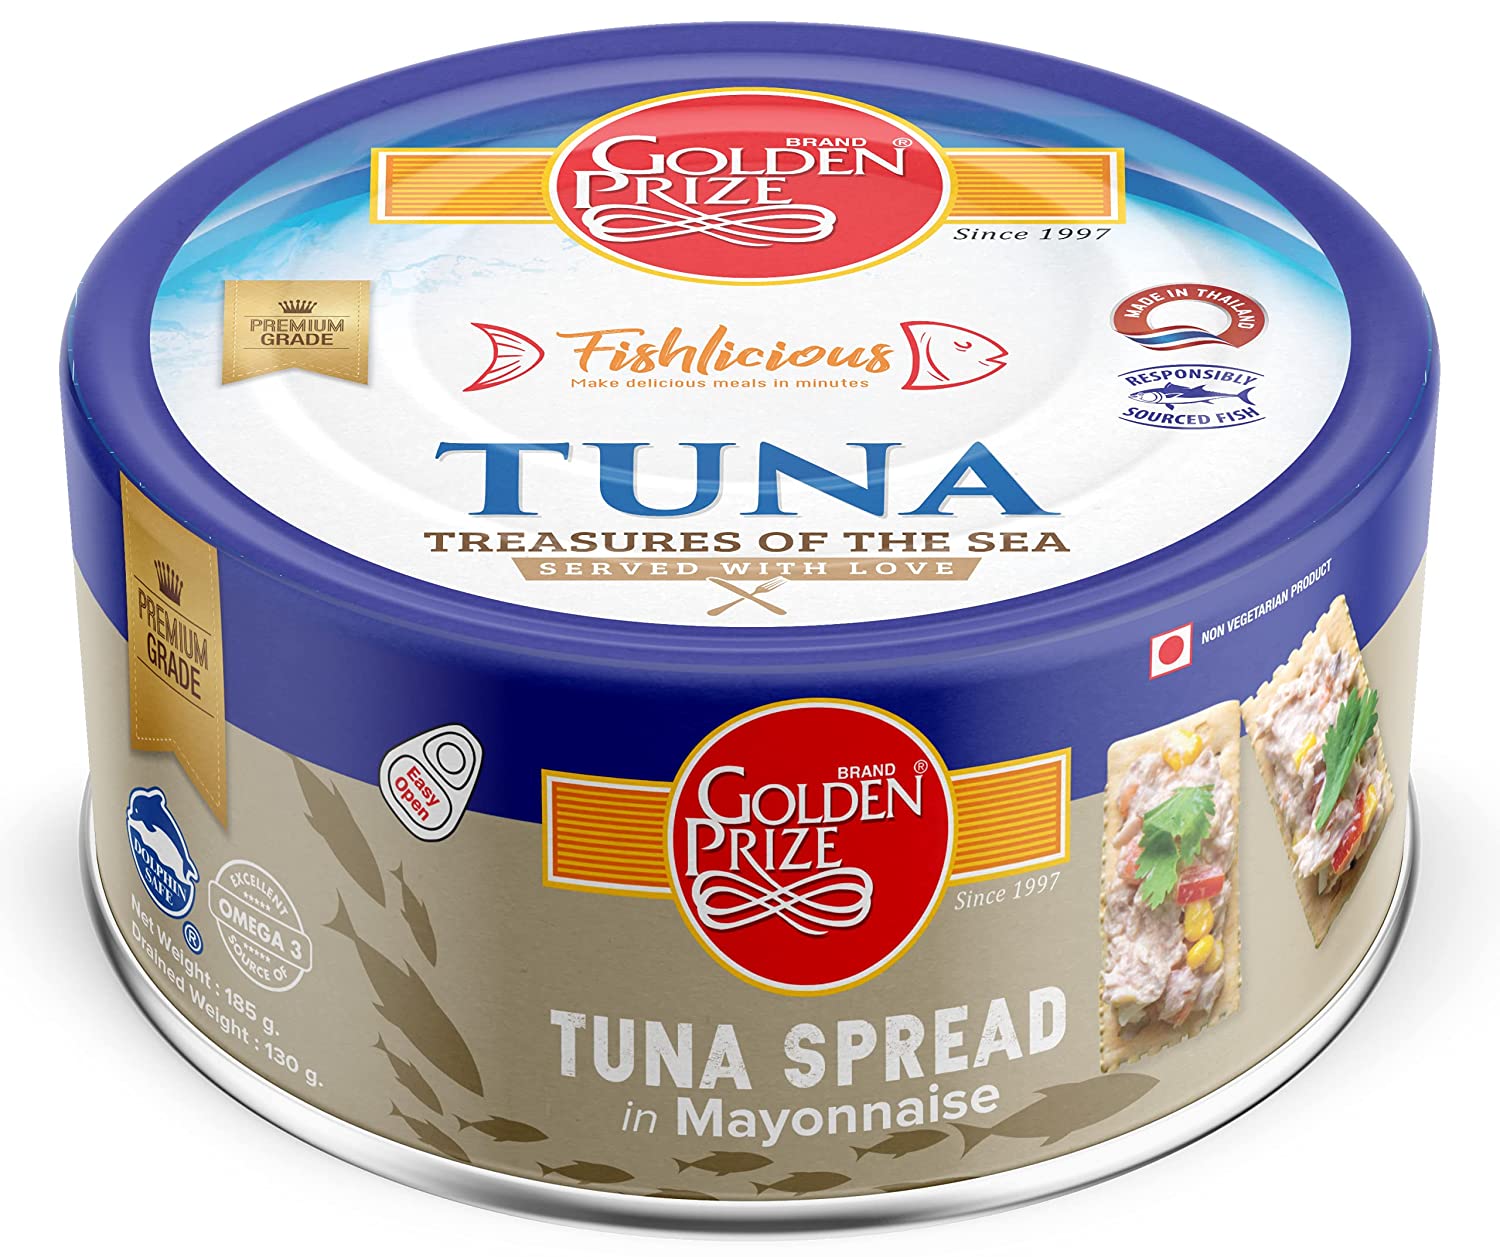 spicy tuna spread with mayonnaise